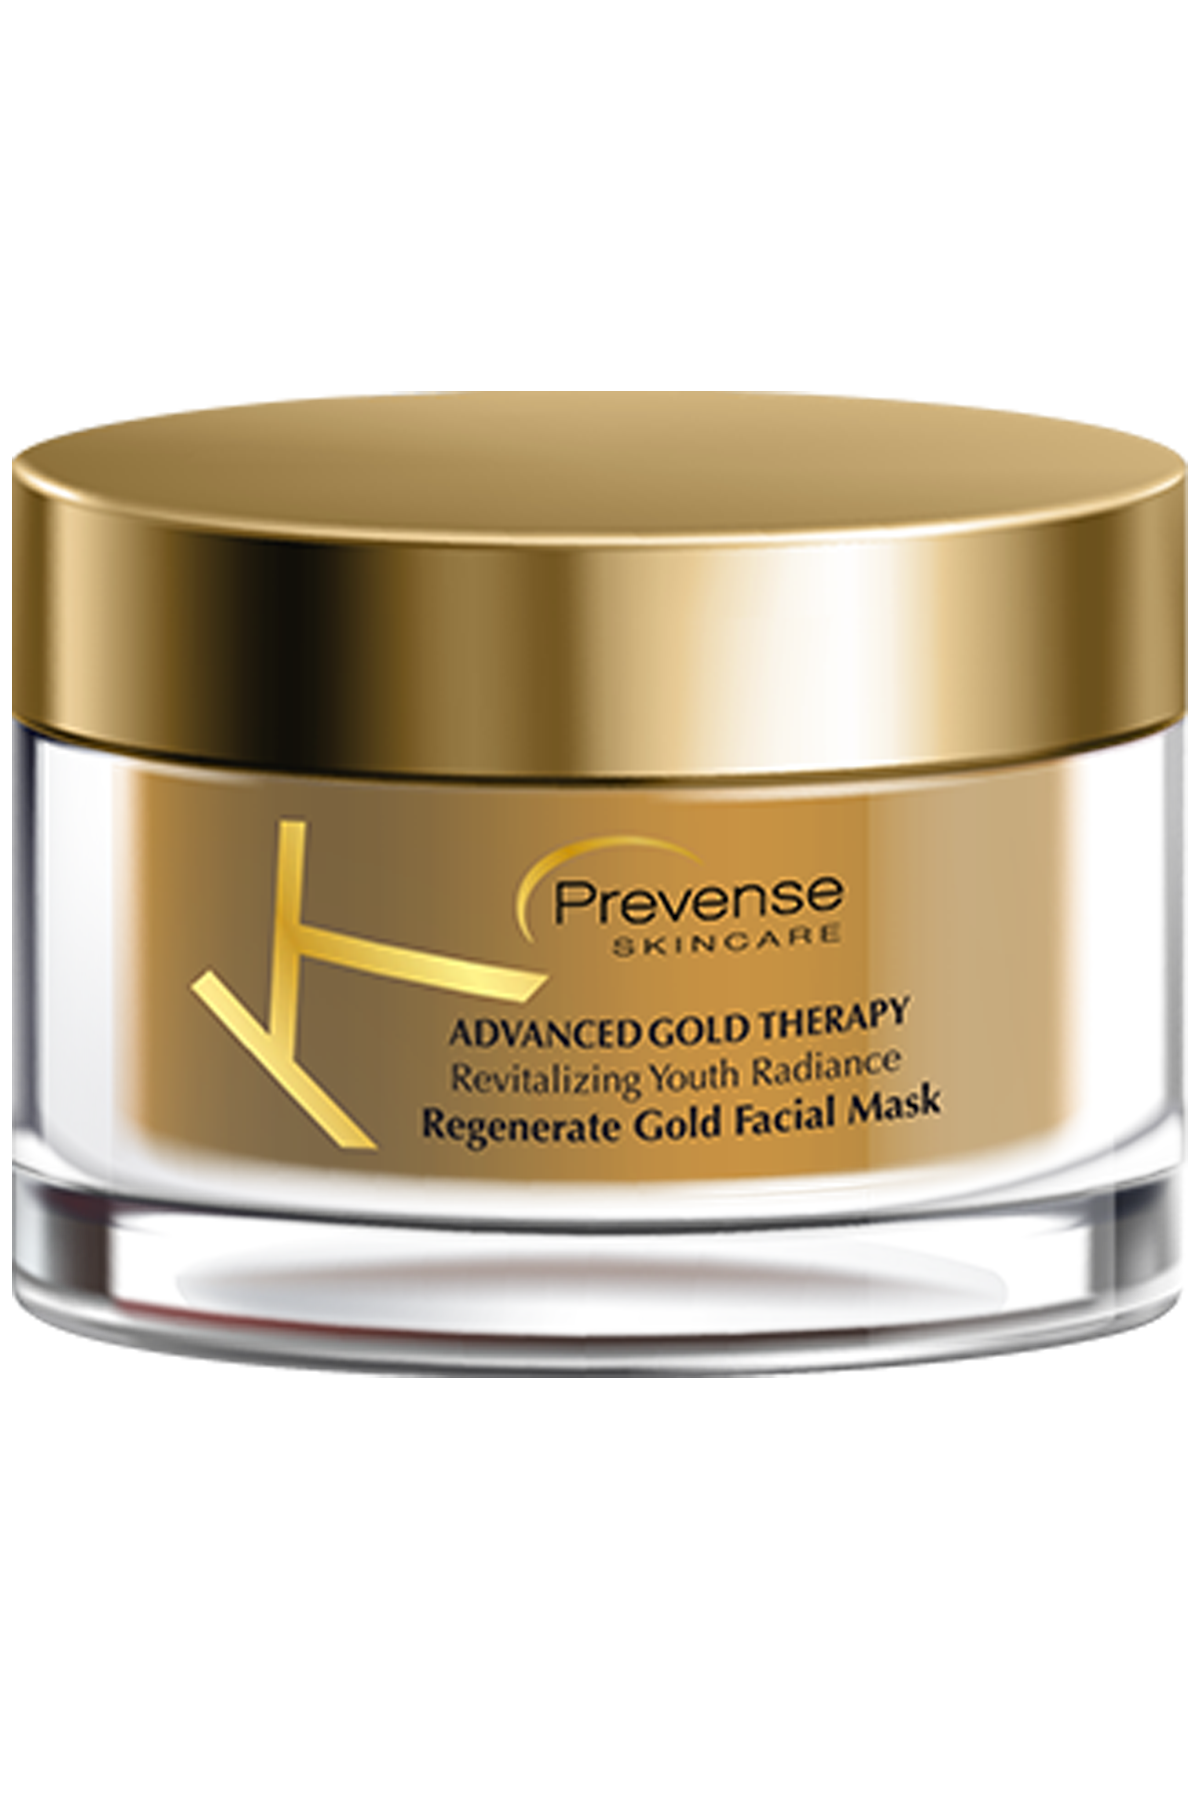 Prevense Regenerate Gold Facial Mask (30 g)